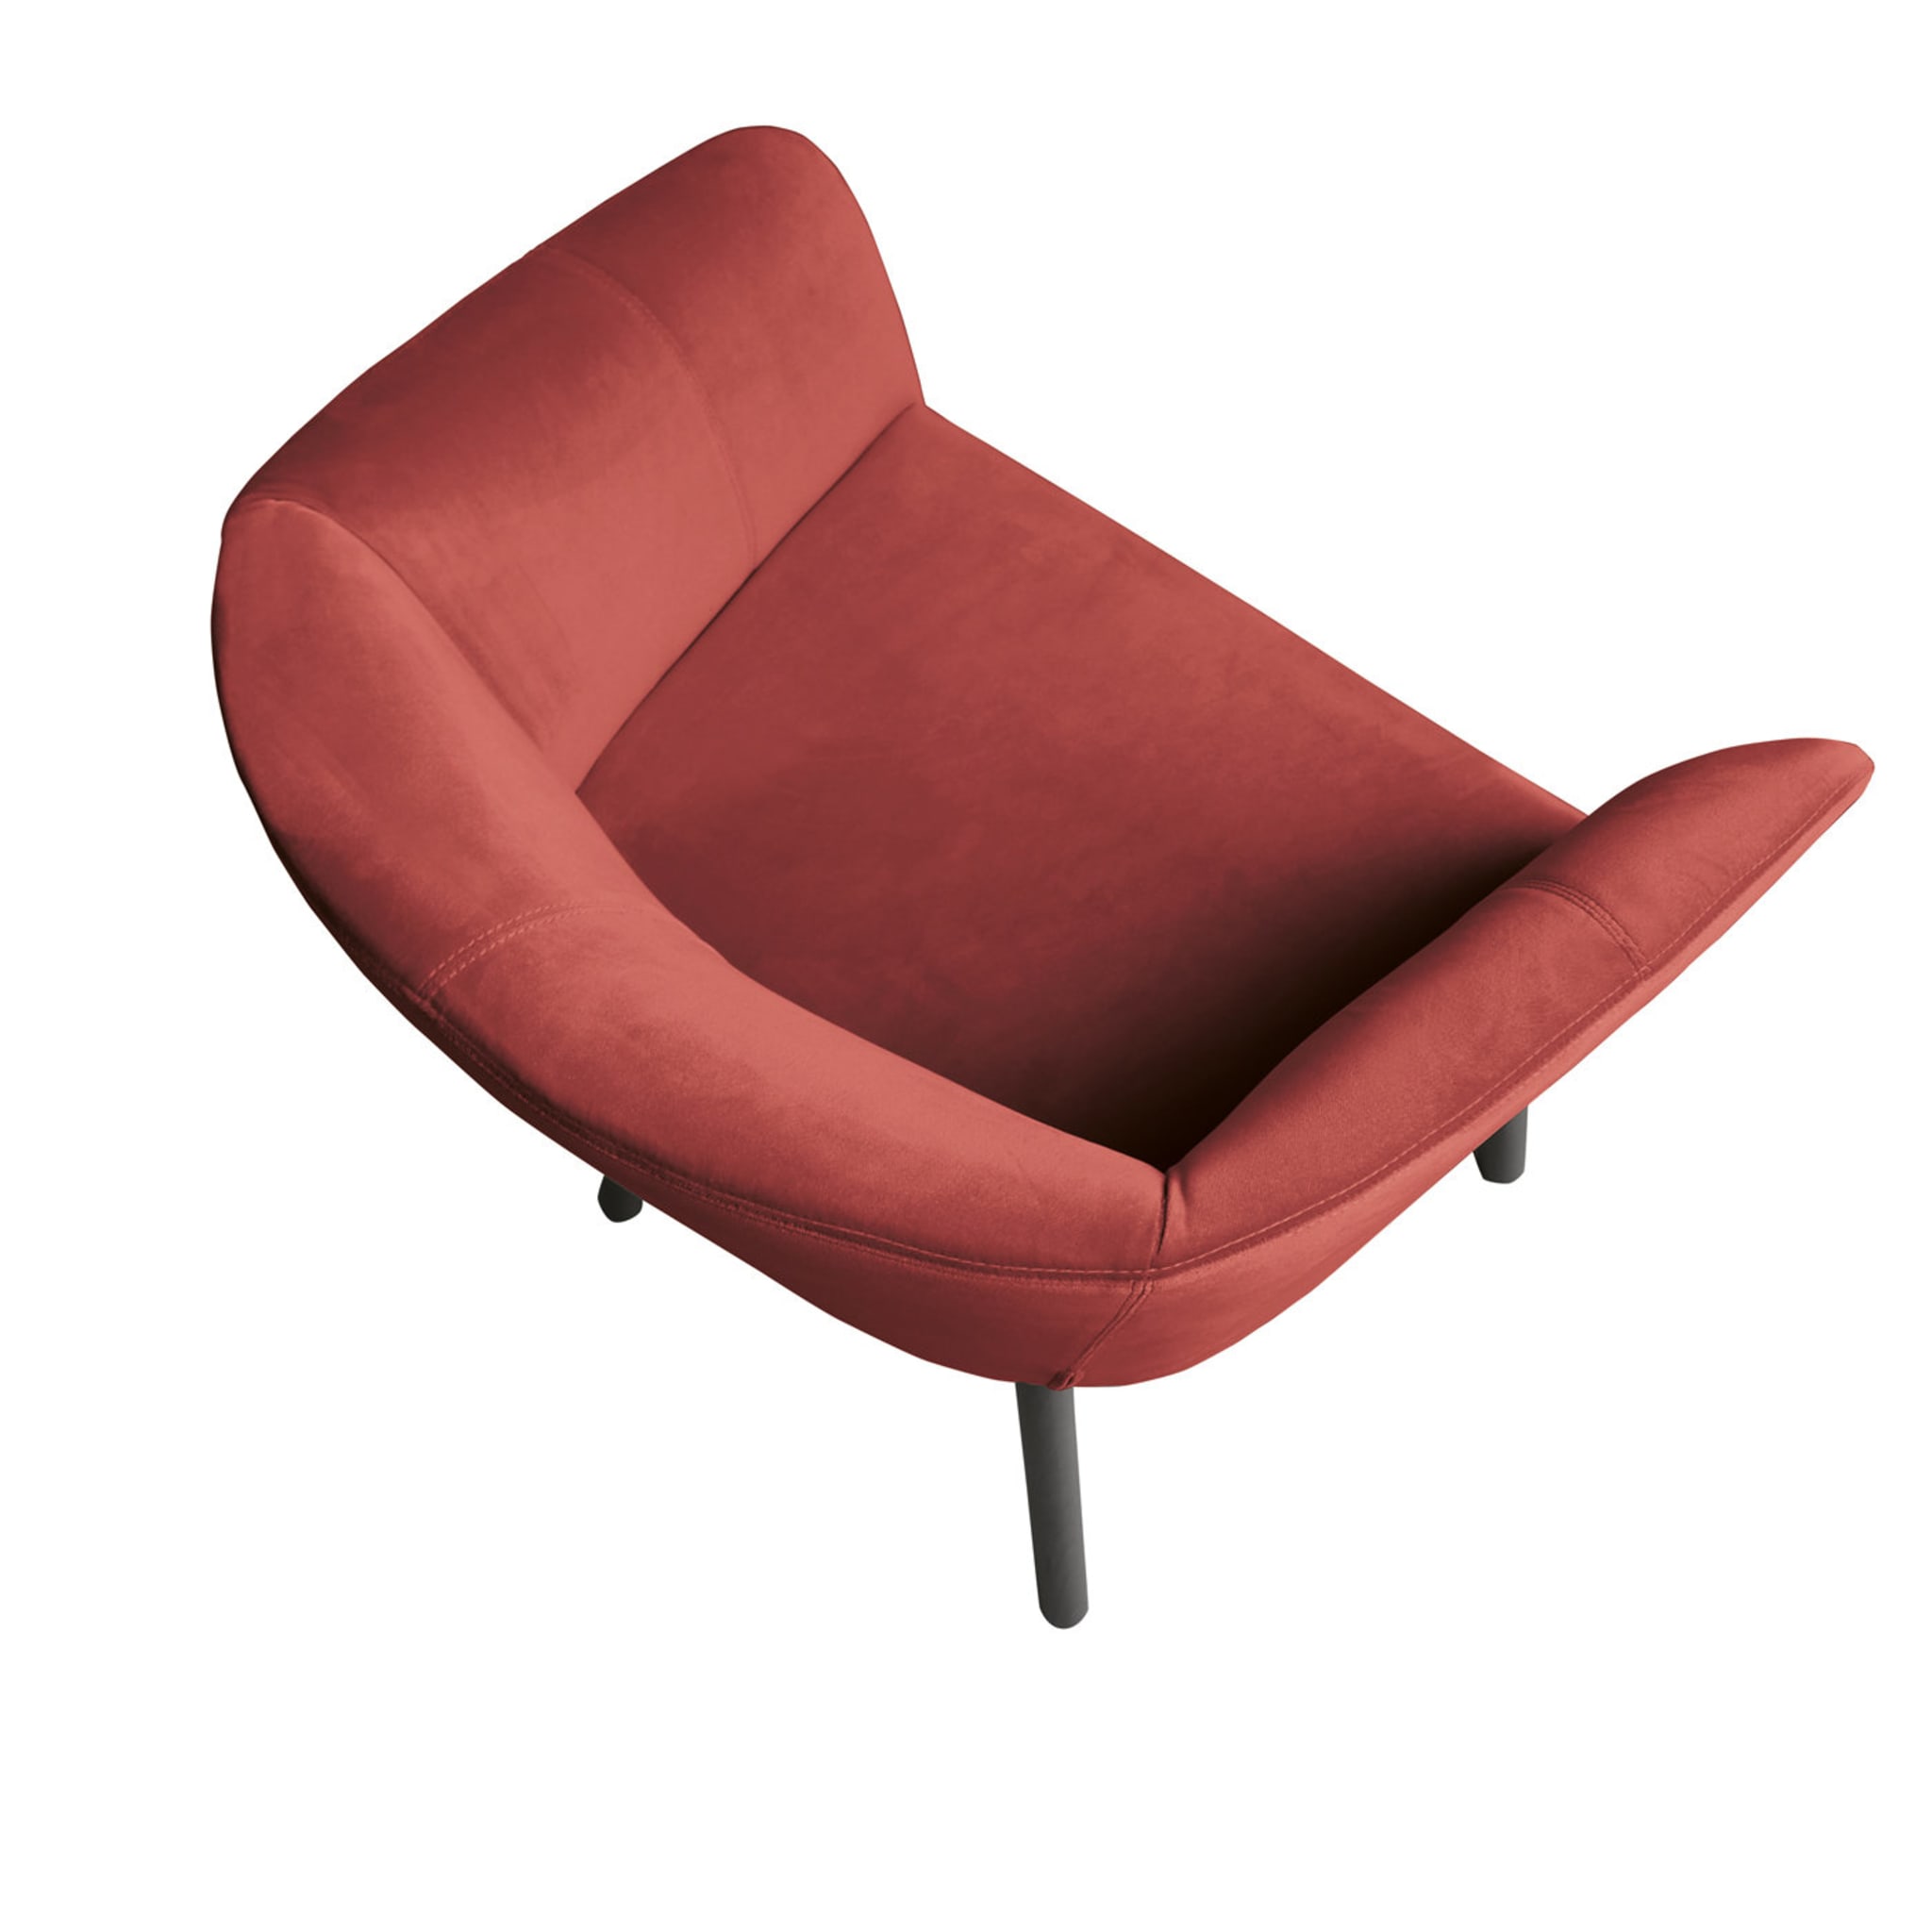 Chaise rouge Balù d'Emilio Nanni - Vue alternative 1